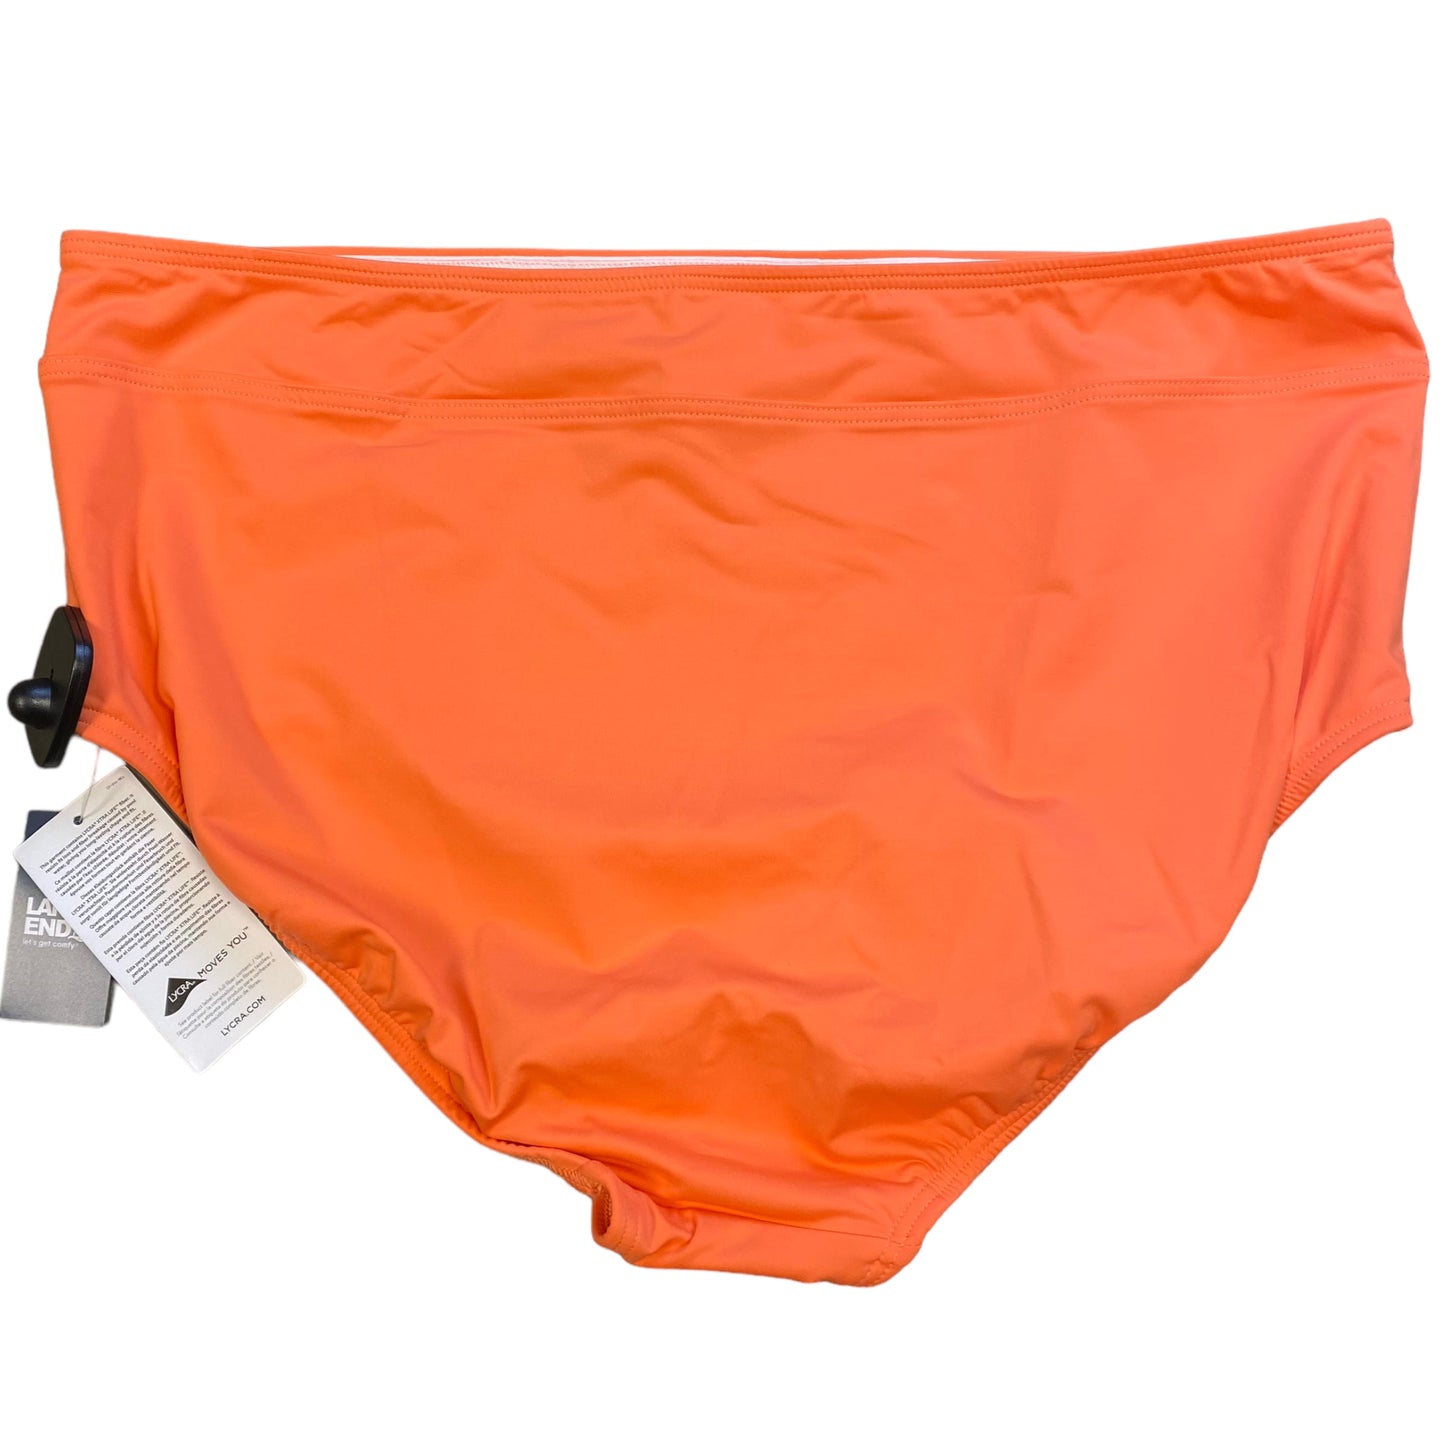 Swimsuit Bottom By Cmc  Size: Xl